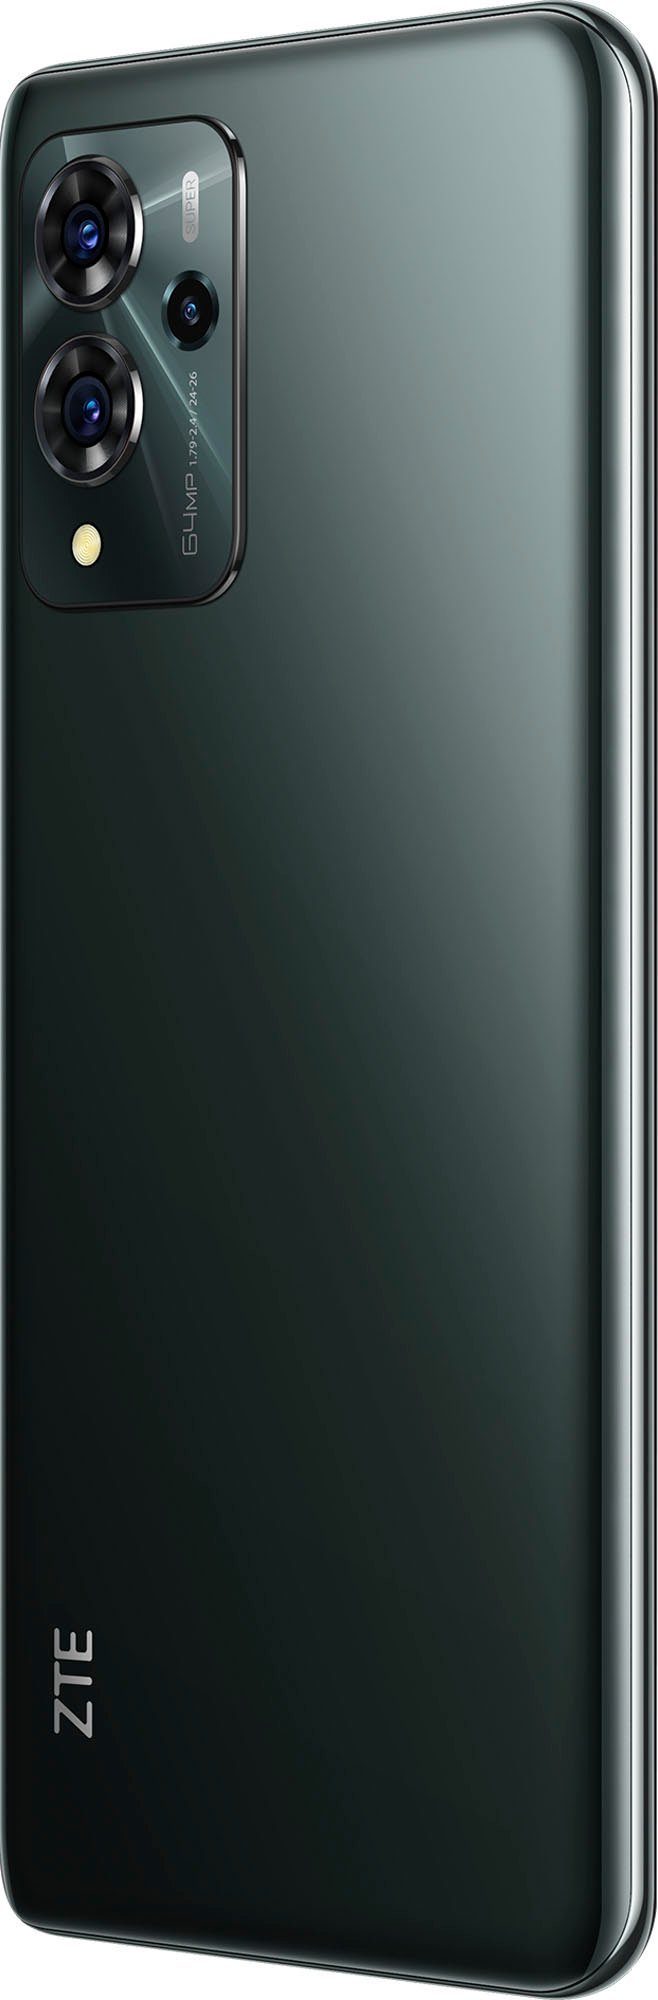 Blade MP pro (16,94 64 V40 Speicherplatz, ZTE Kamera) Smartphone GB Zoll, 128 cm/6,67